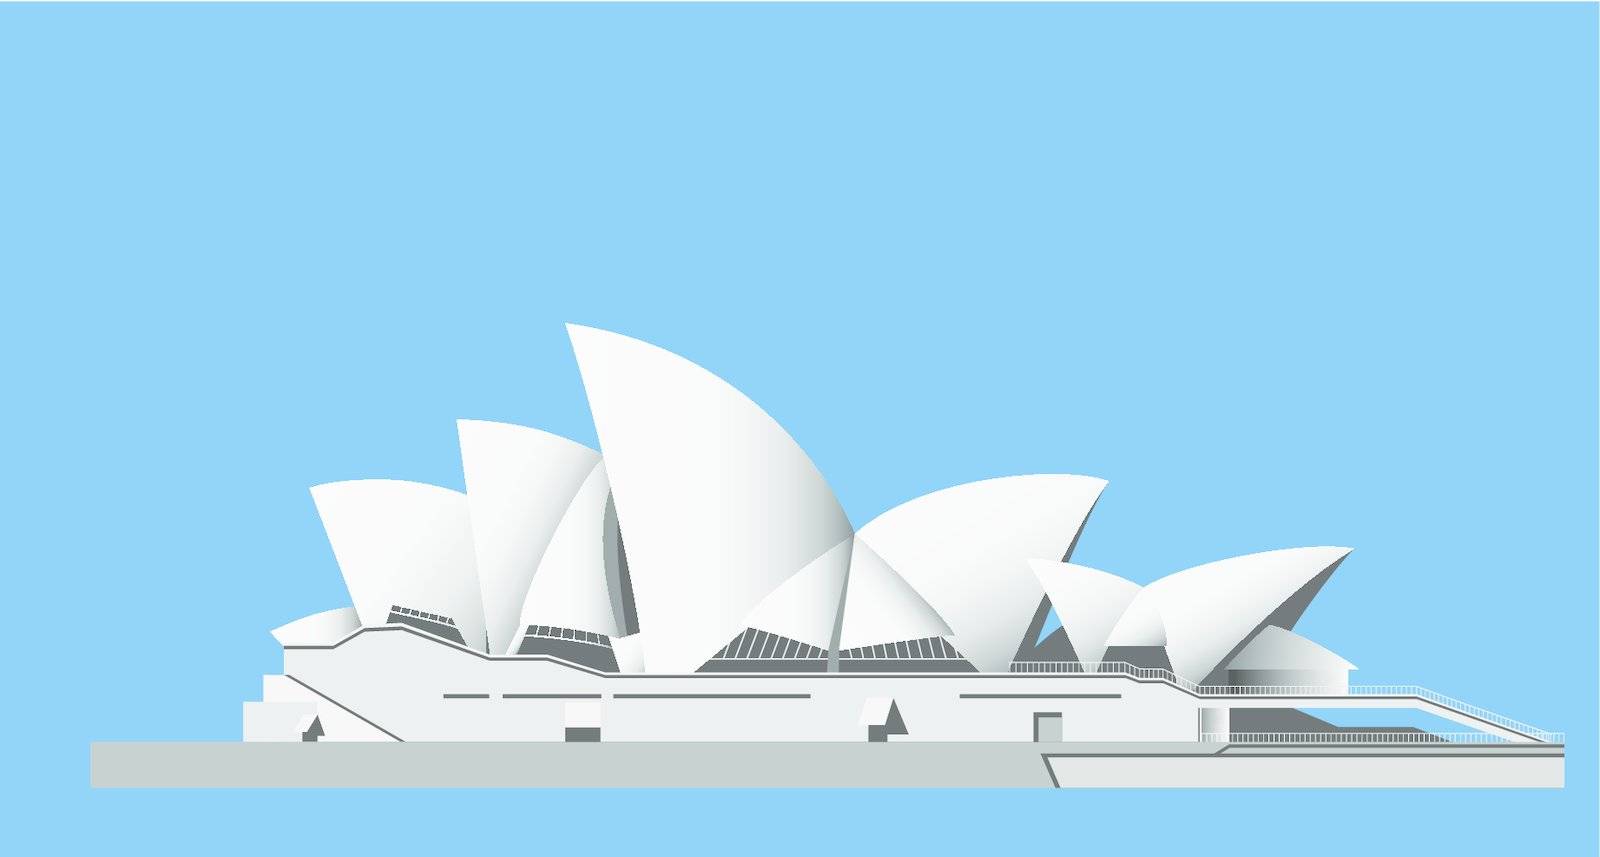 Illustrationof the Sydney Opera House - vector